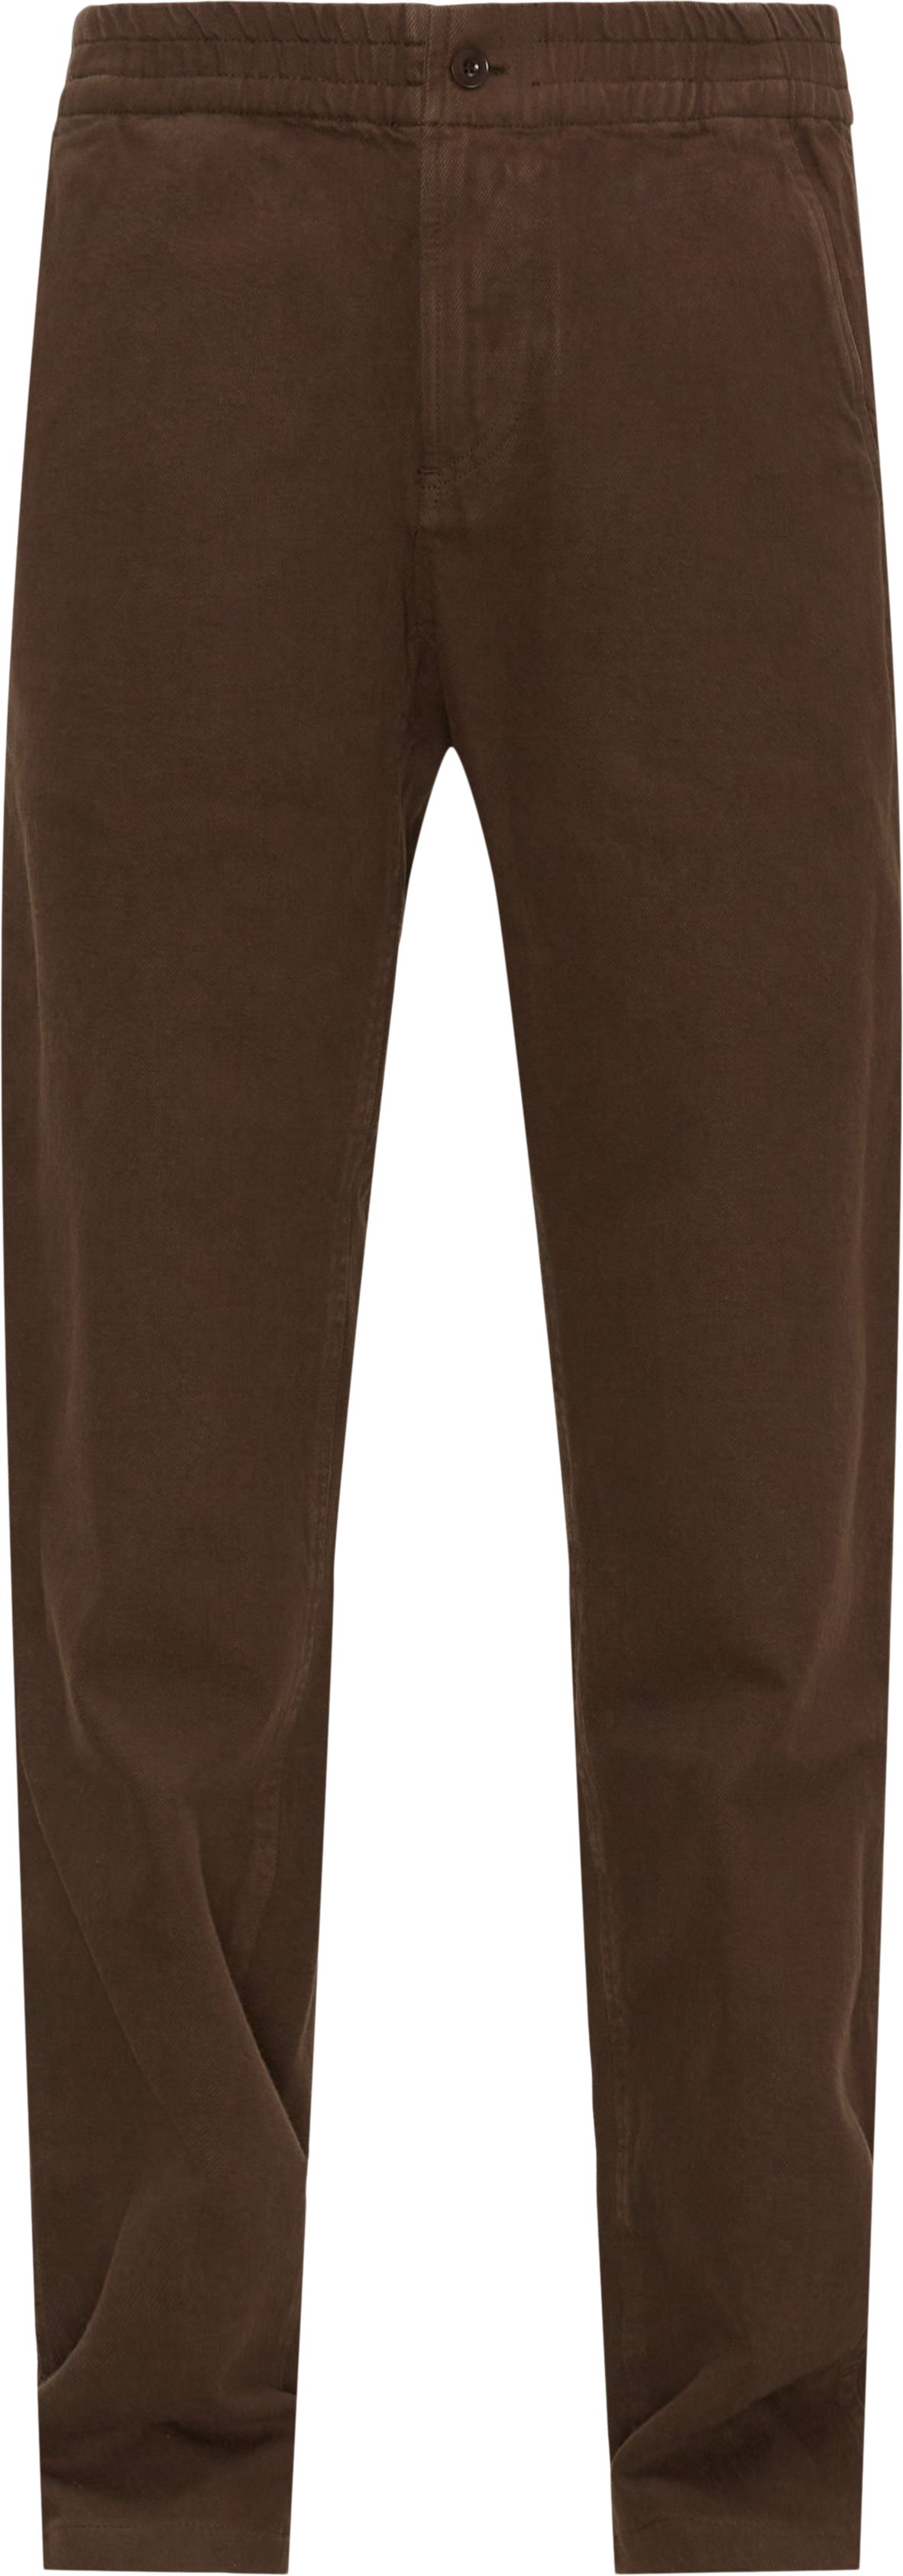 A.P.C. Trousers COFCN H08408 CHUCK Brown